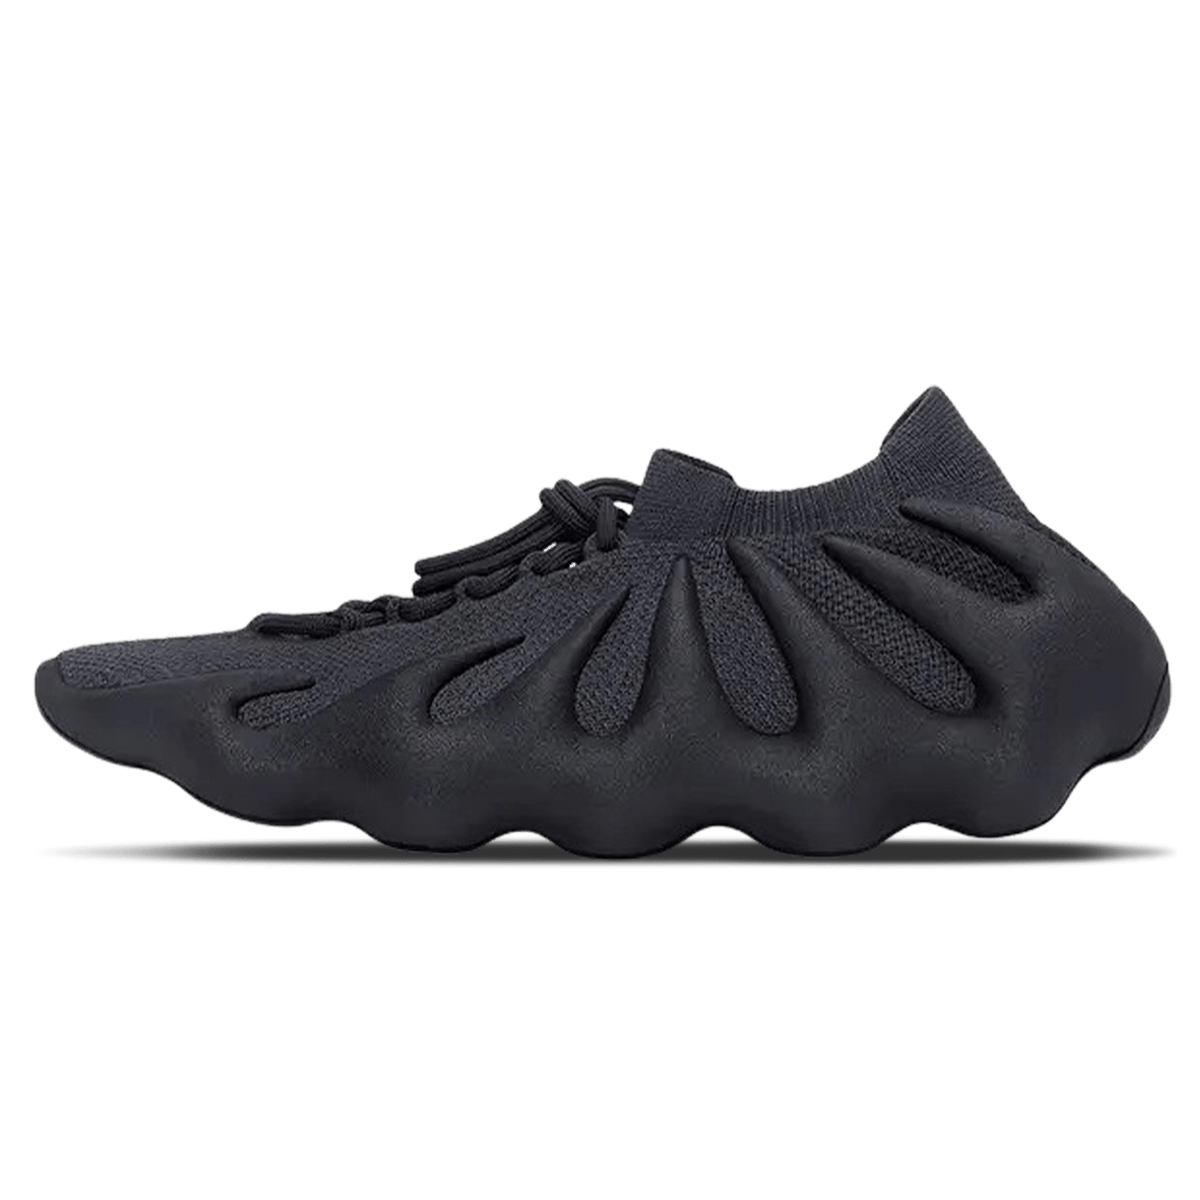 Adidas Yeezy 450 'Utility Black' - Kick Game